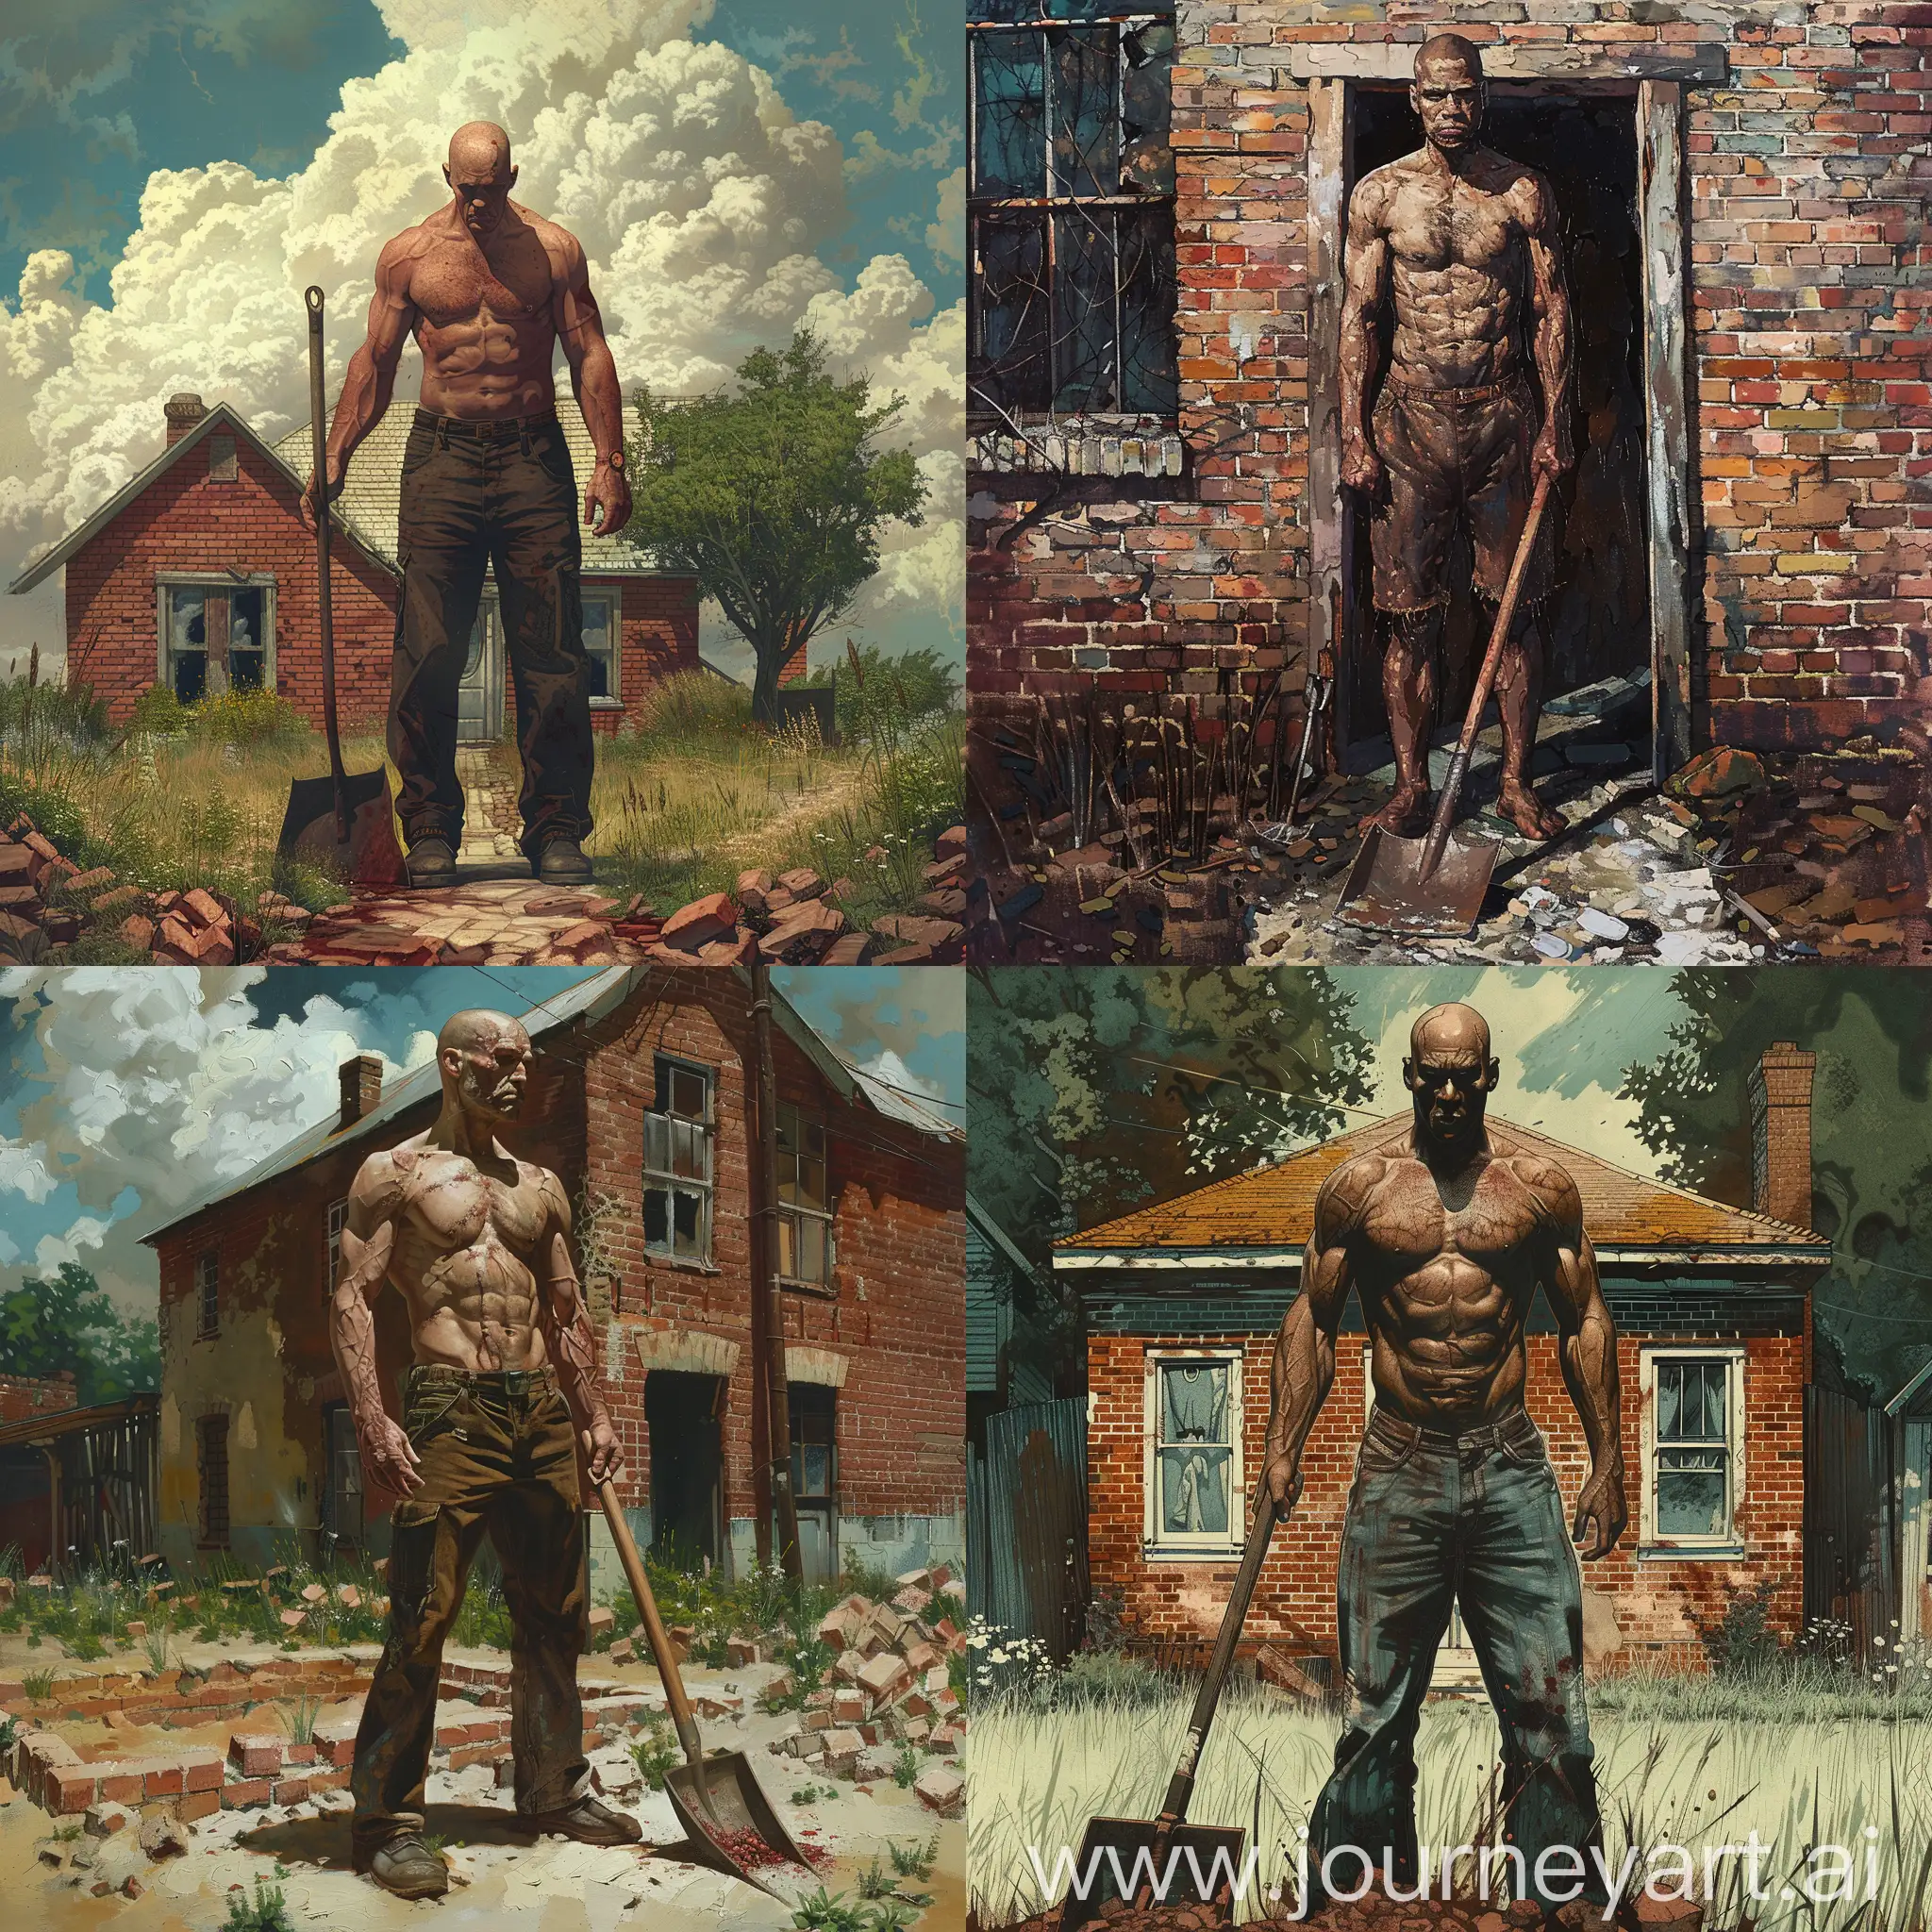 Strong-Bald-Man-Burial-with-Shovel-at-Brick-House